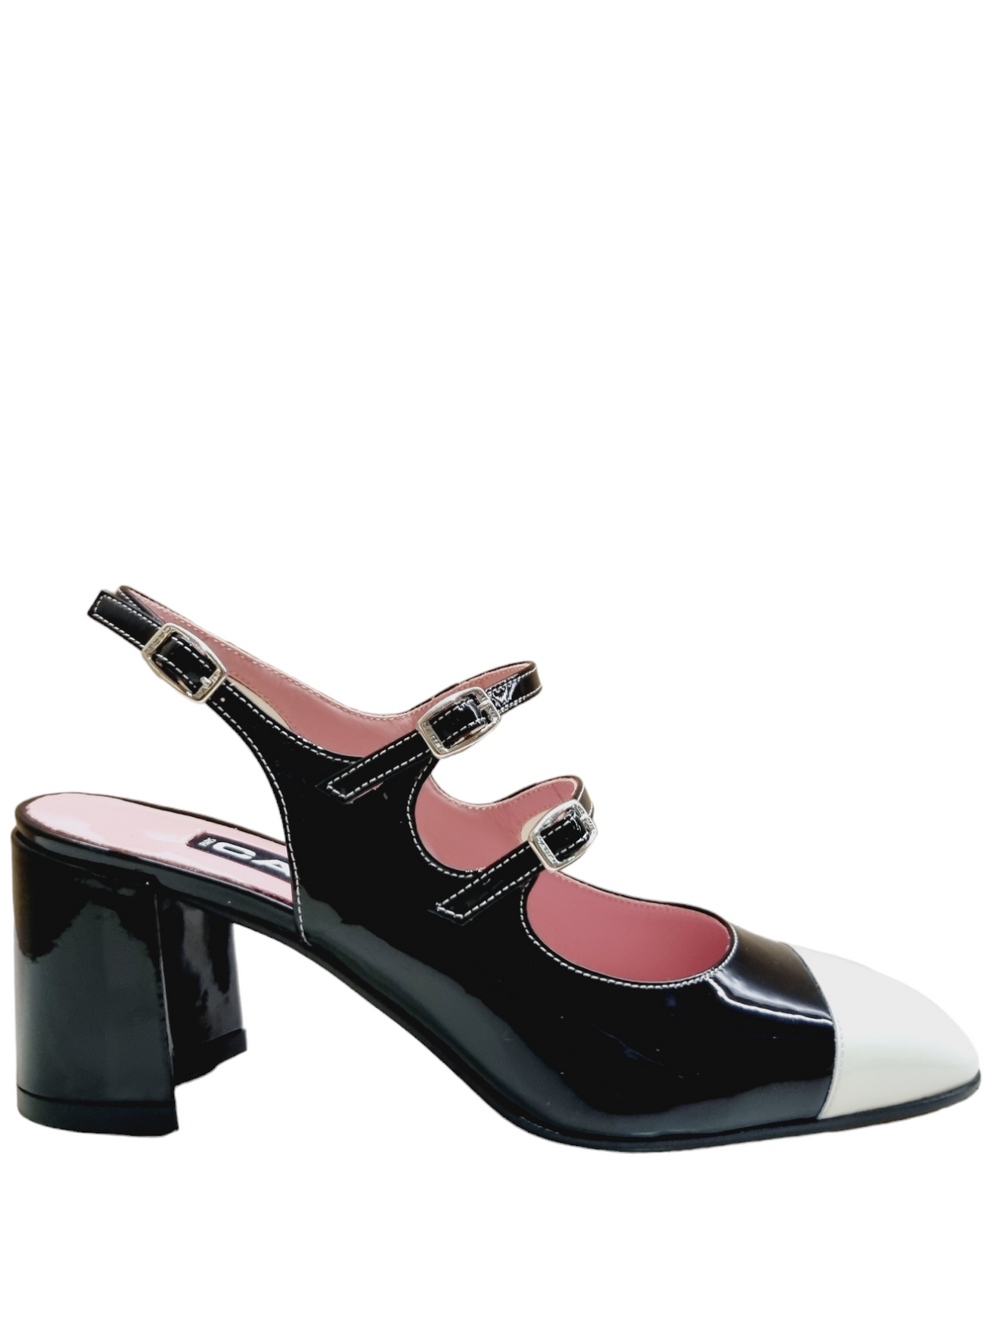 Papaya Black/White Patent Mary Jane - Carel Paris - Liberty Shoes Australia